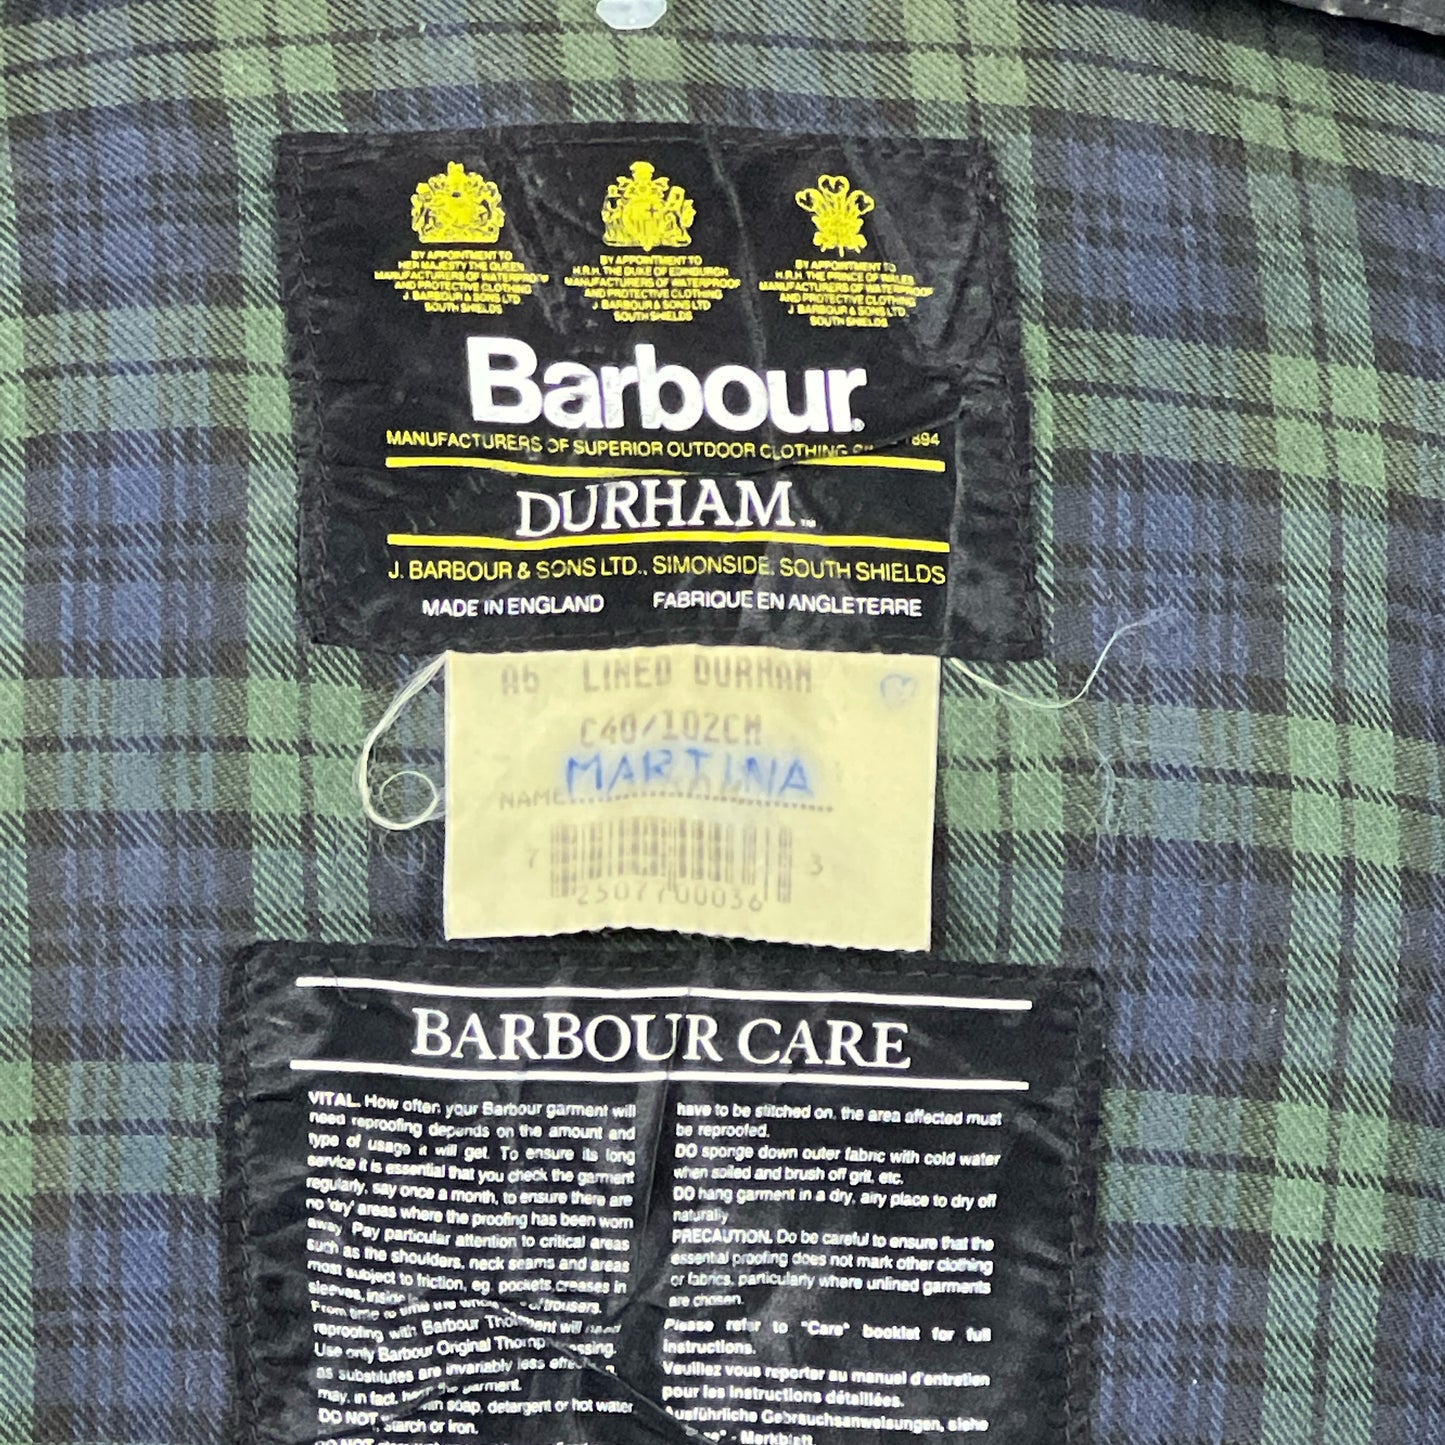 Giacca Barbour blu vintage Durham C40/102 cm- Waxed Durham Jacket size Medium